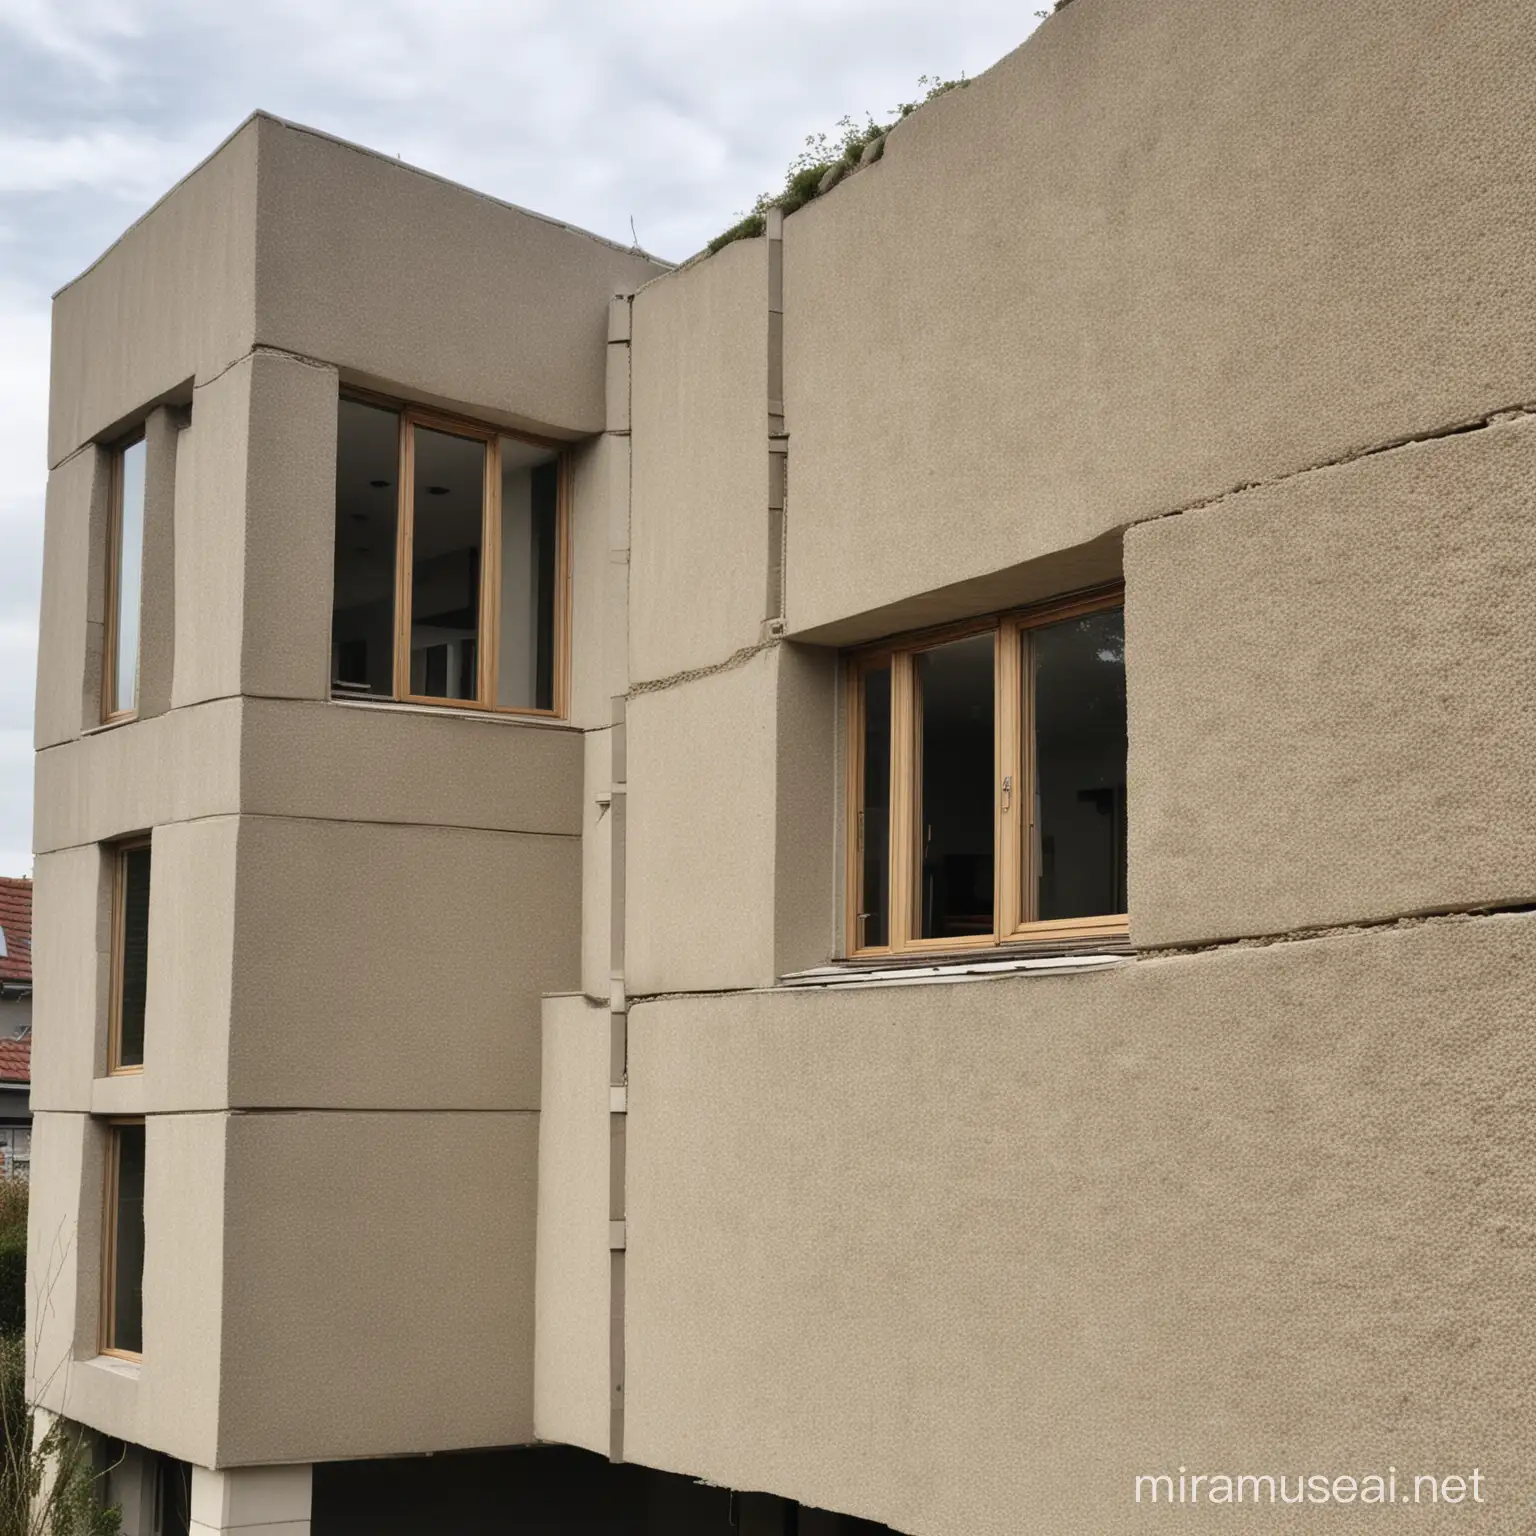 Brutalist Style Hempcrete Houses Contemporary Architecture in Beige Grey